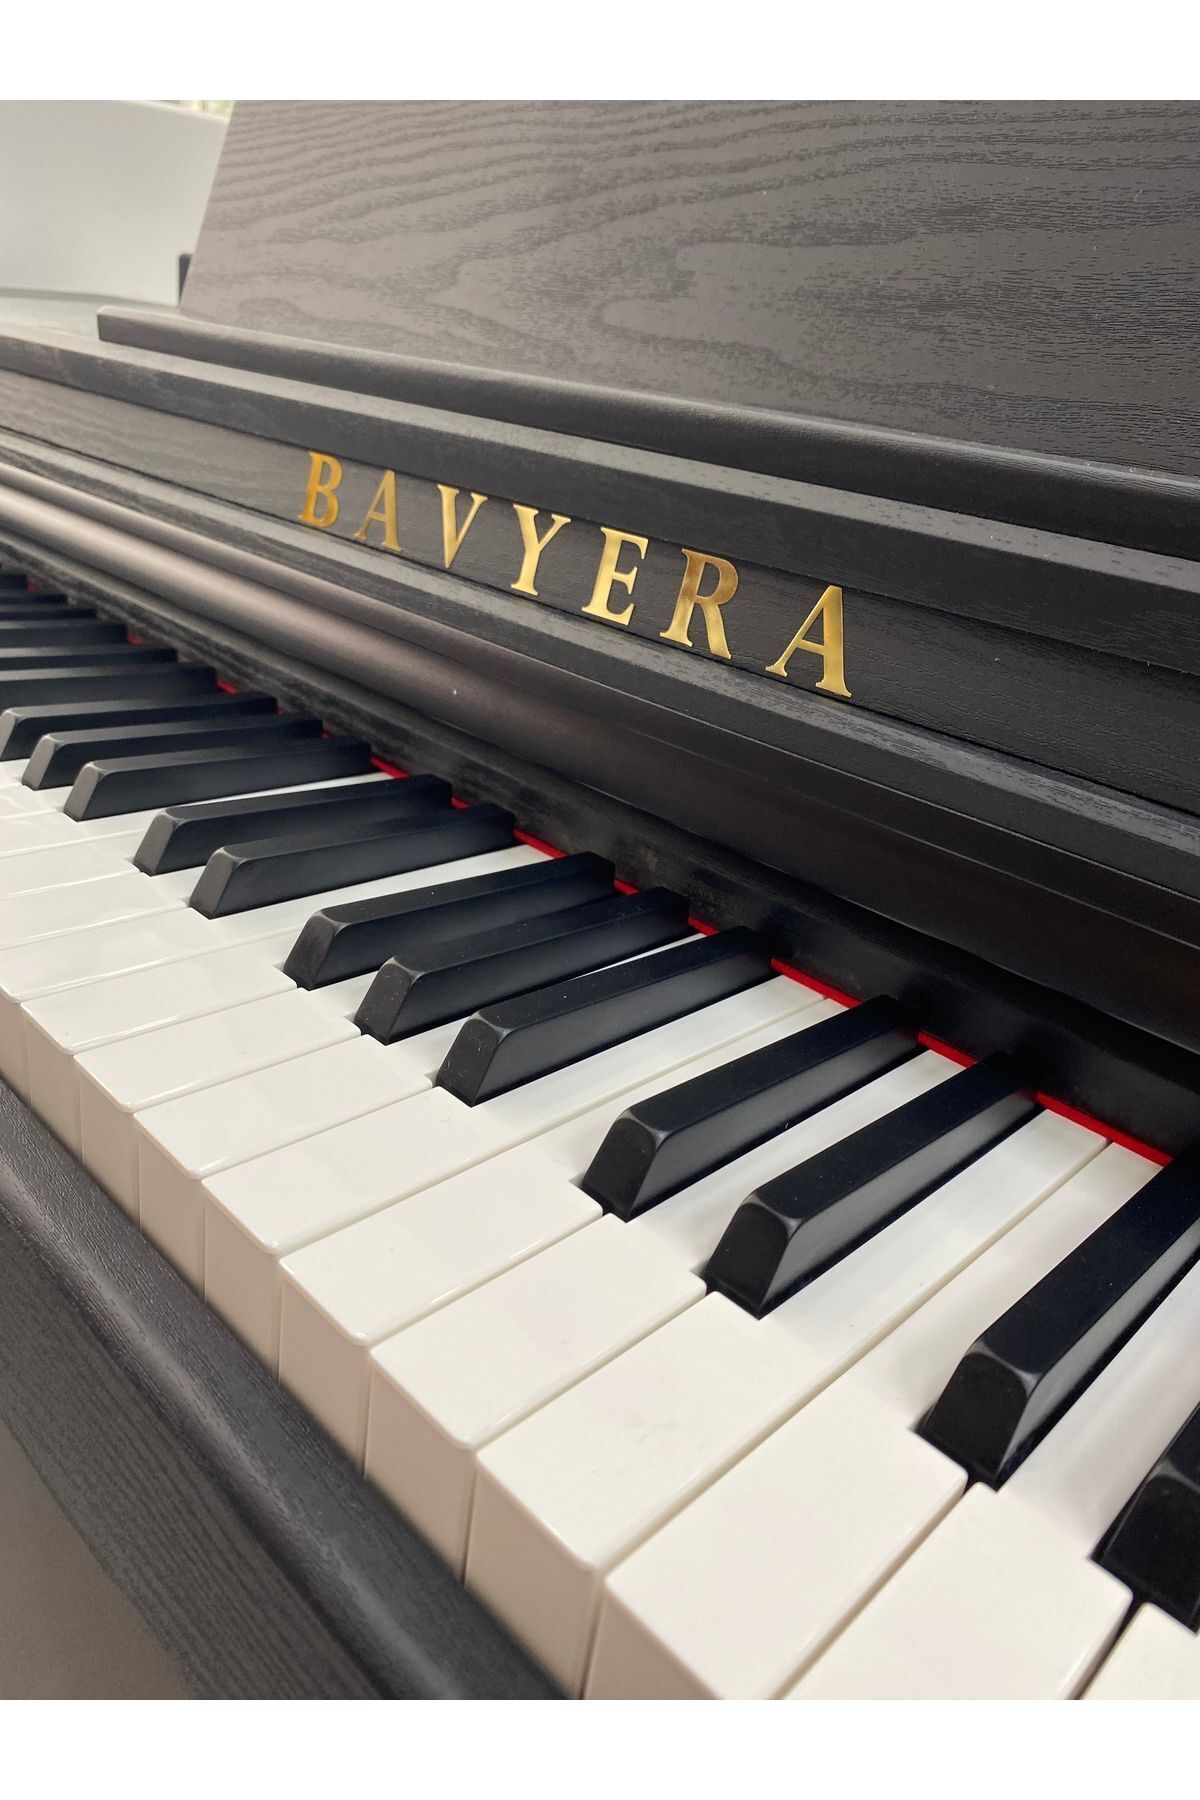 GMC MUSIC STORE Steinbeck & Bavyera Sp077 Dijital Piyano